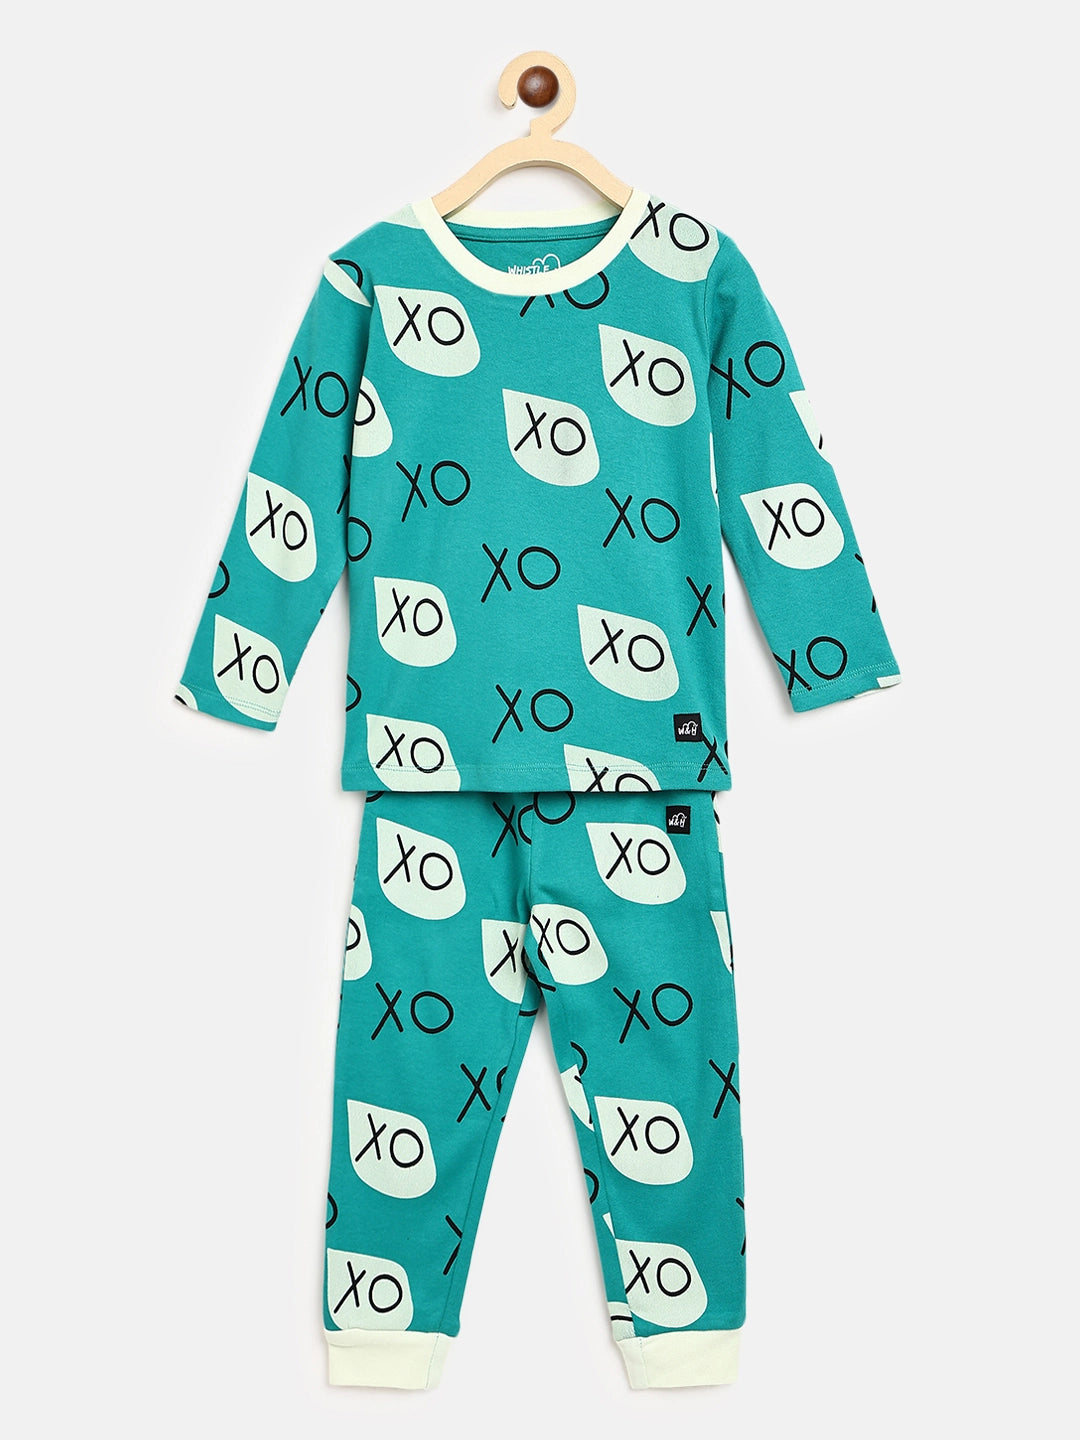 Classic Pyjama Sets Combo- Hashtag and Blue XO